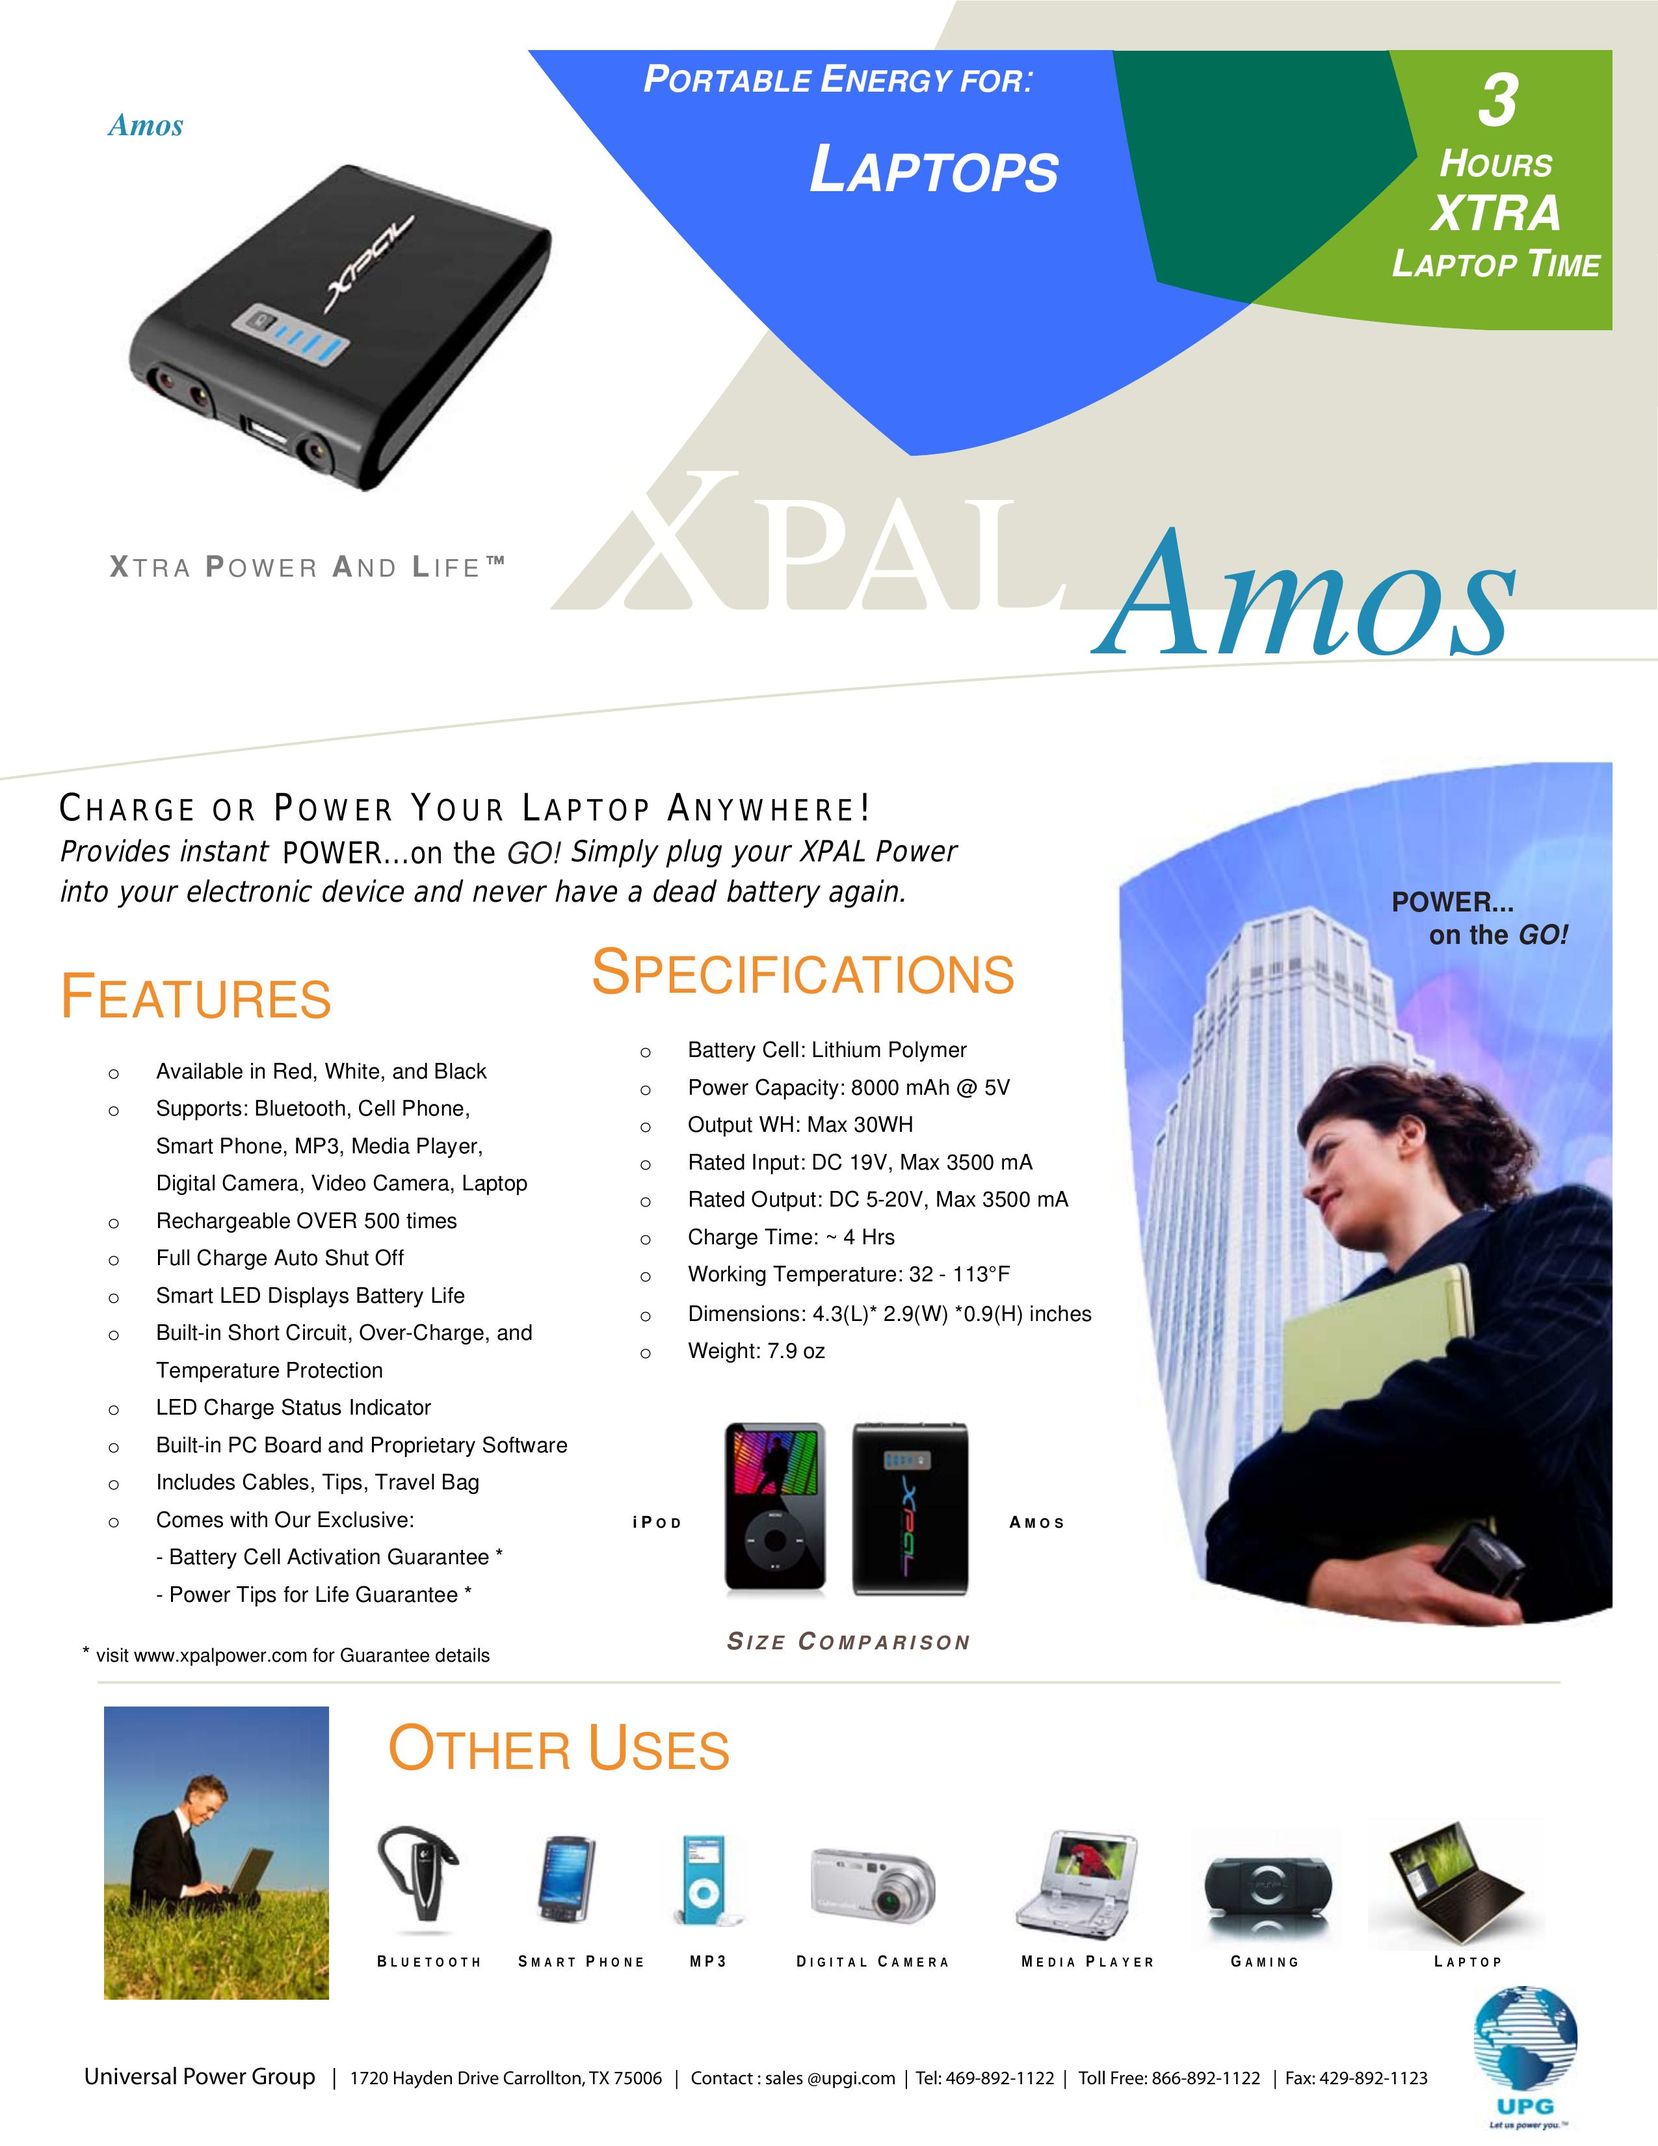 Universal Power Group XPAL Amos Laptop User Manual